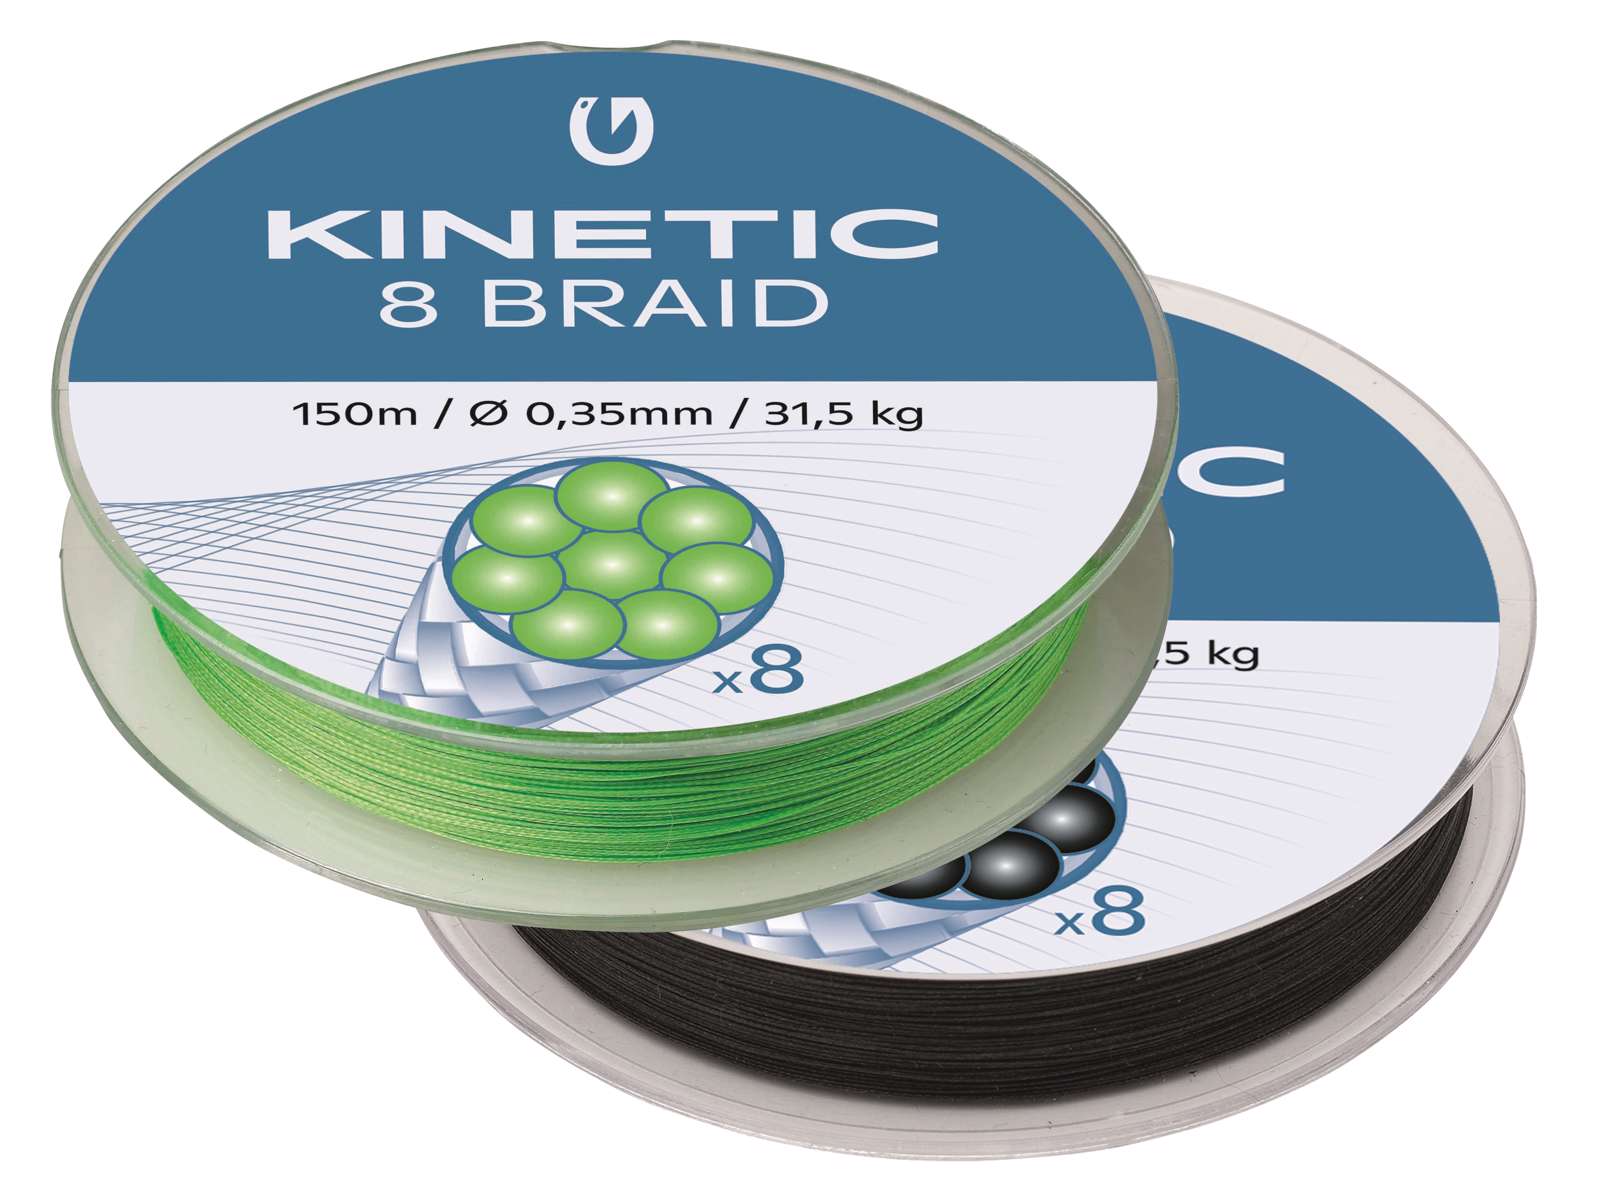 Kinetic 8 Braid: 12.0kg Fluo Green 150m